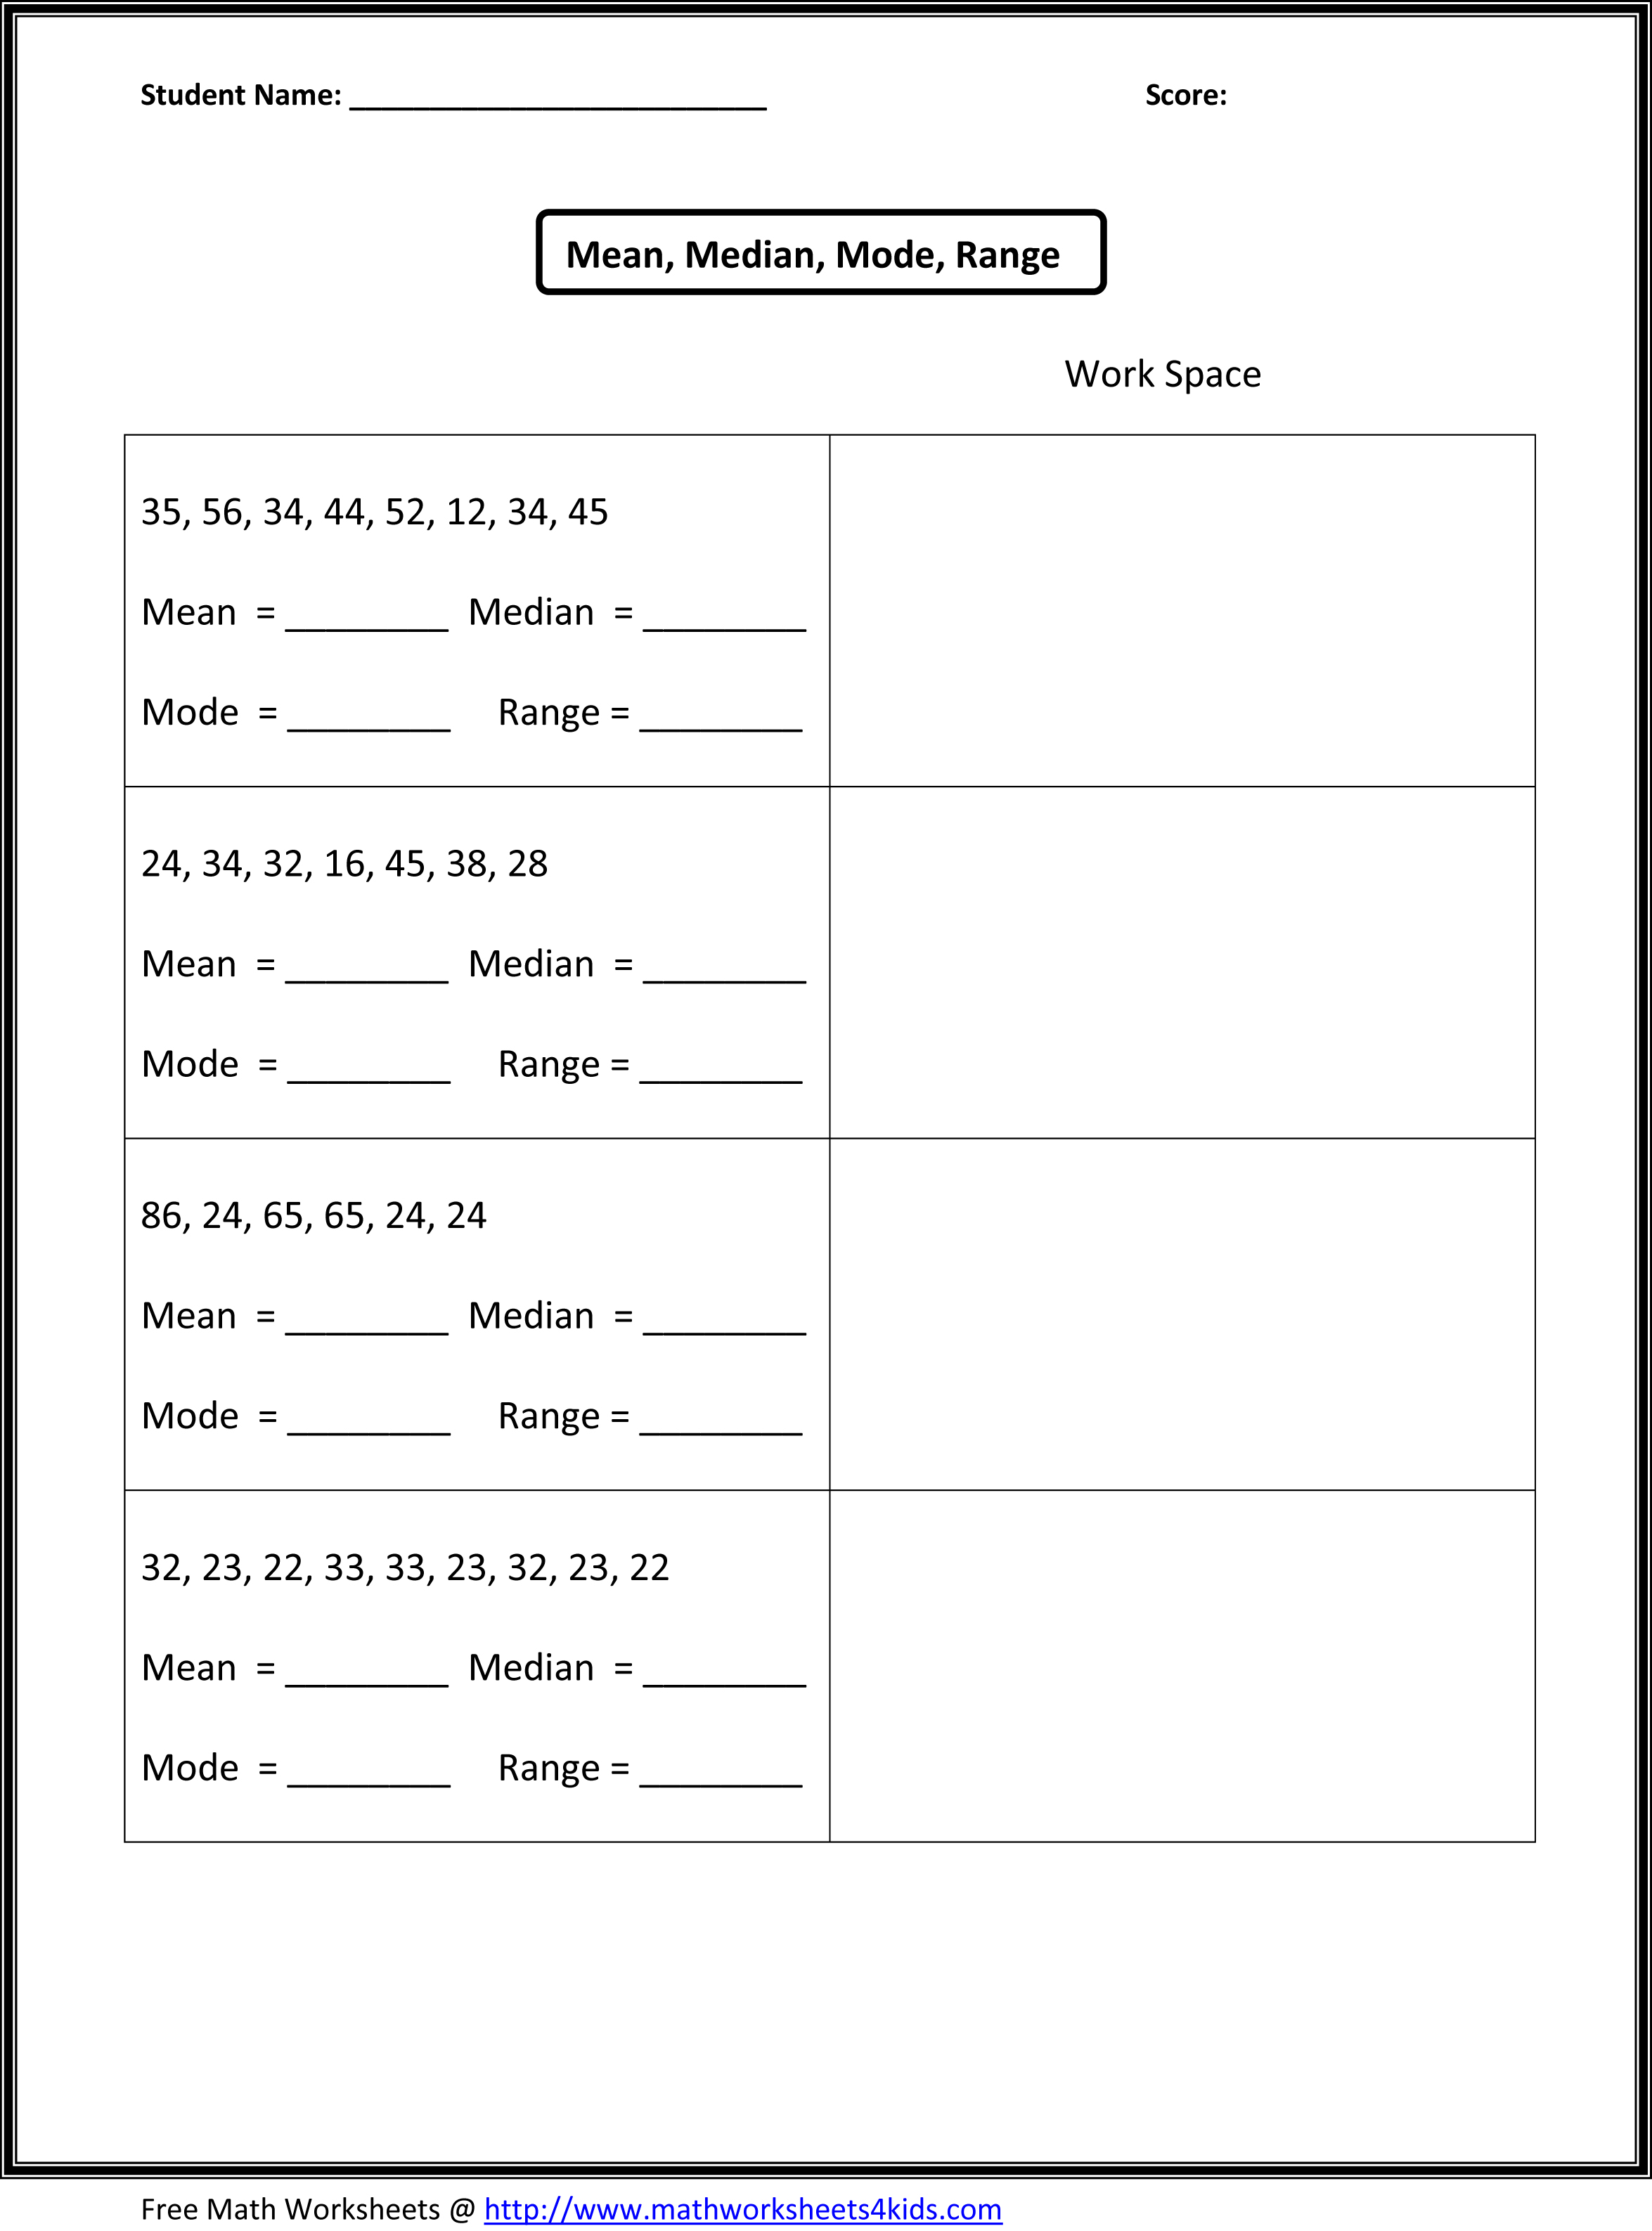 14 Best Images of Multiplying Integers Worksheets 7th Grade  6thGrade Integers Worksheets, 7th 